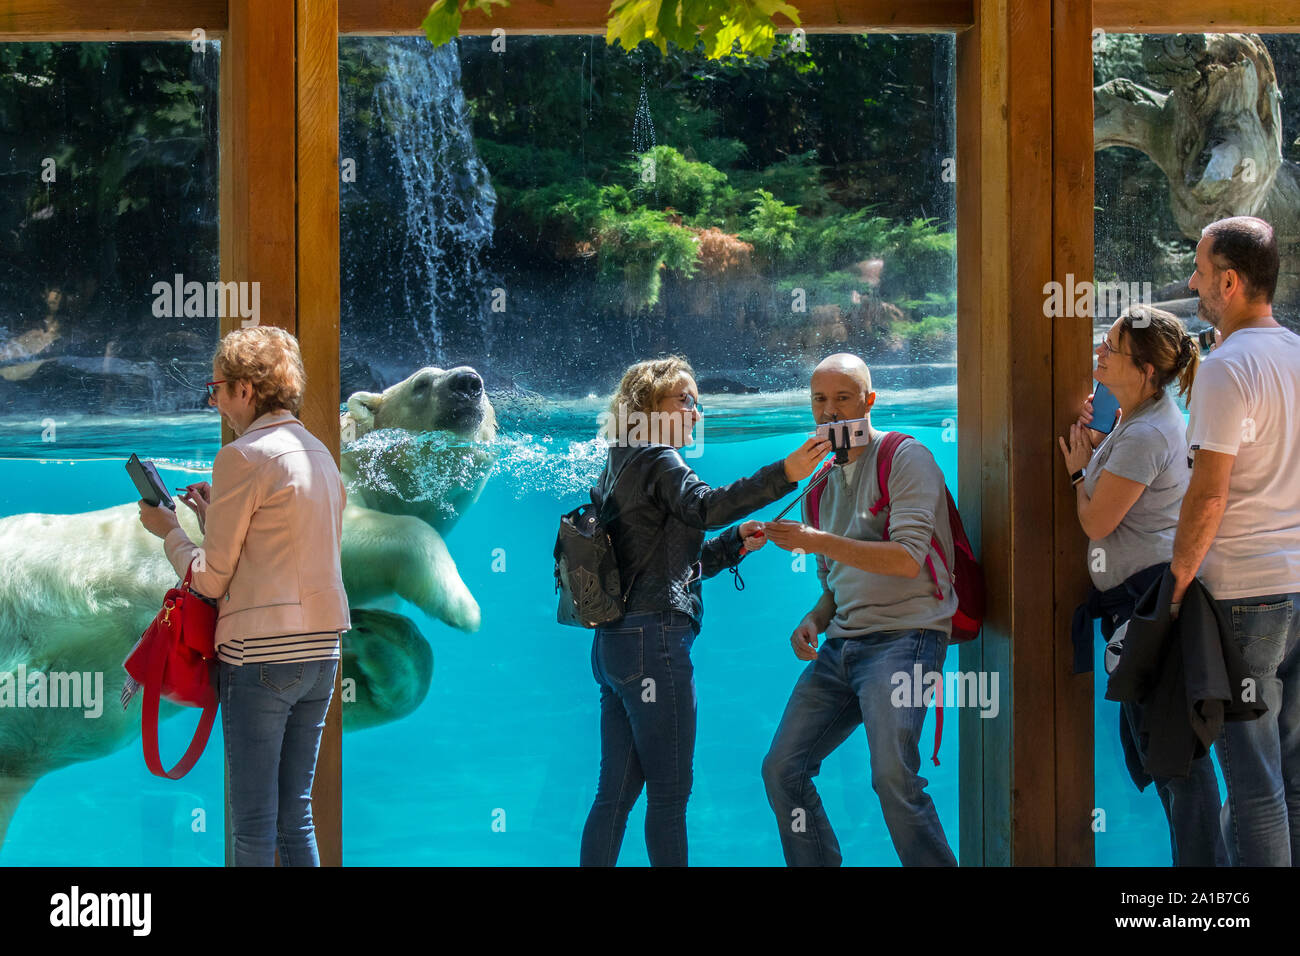 Visitors taking selfies with smartphones while giant polar bear (Ursus maritimus / Thalarctos maritimus) is swimming past, Zoo de la Flèche, France Stock Photo